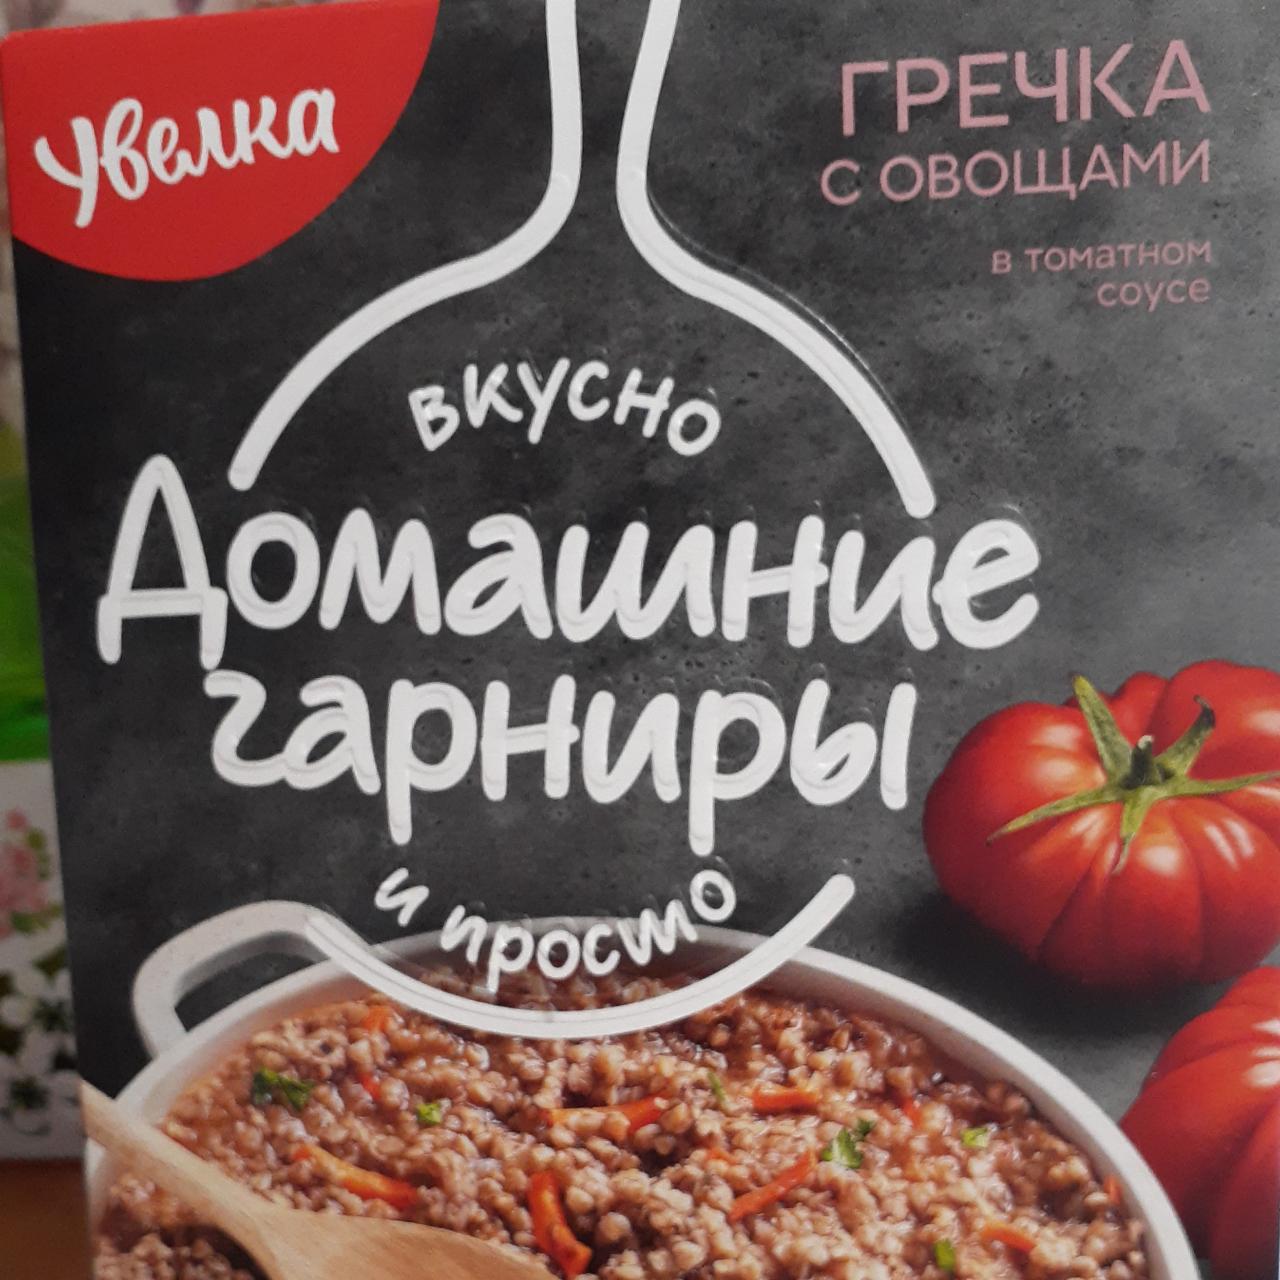 Фото - Гречка с овощами в томатном соусе Увелка